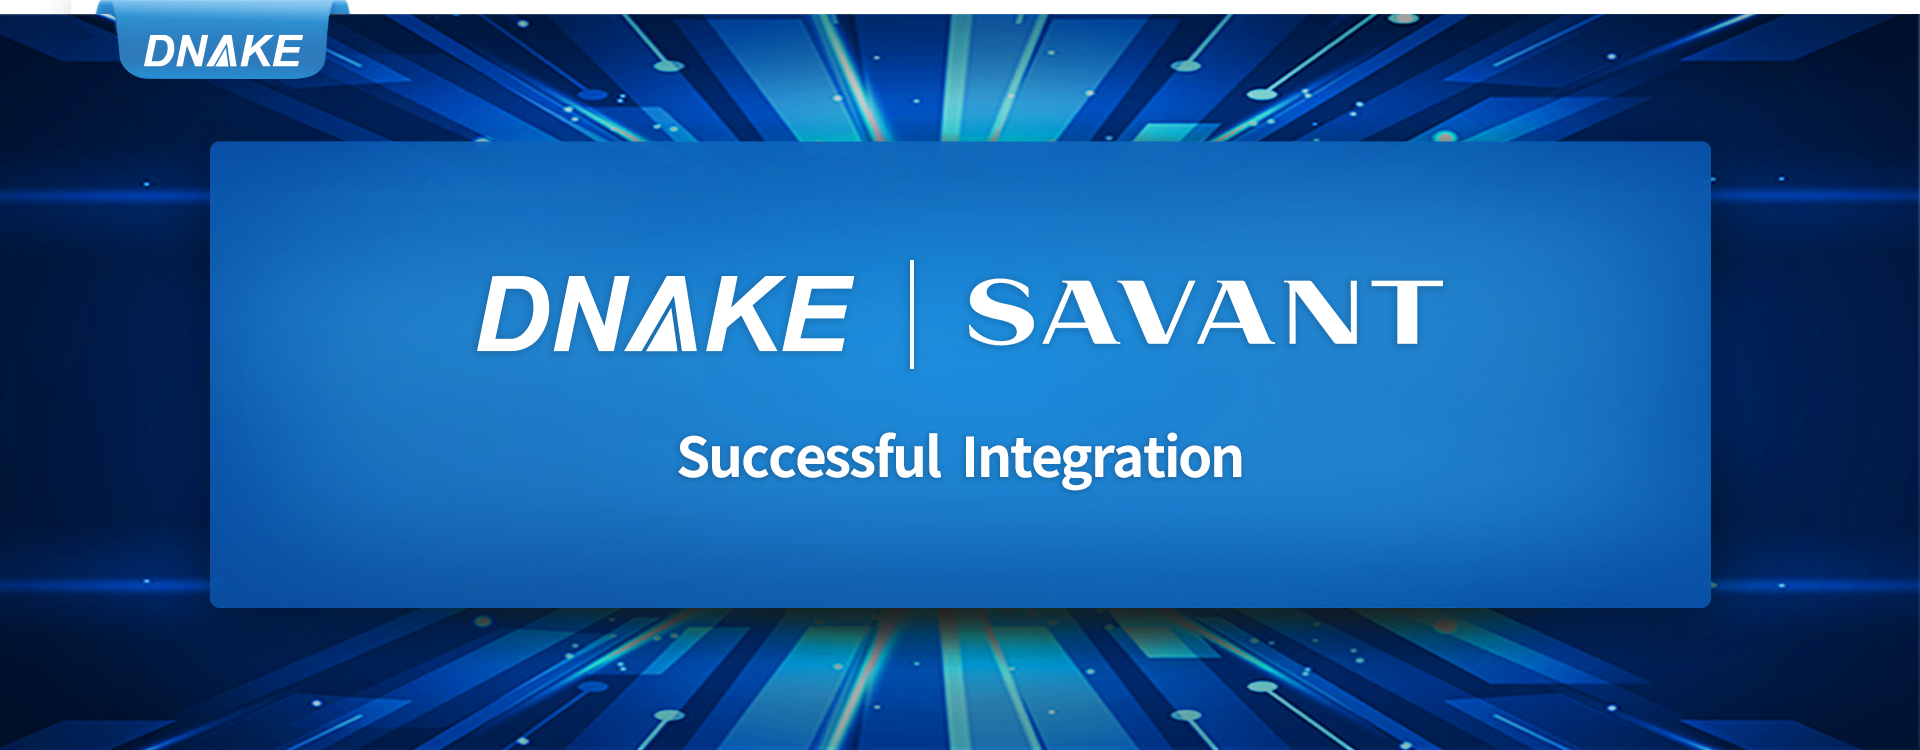 Savant-DNAKE News